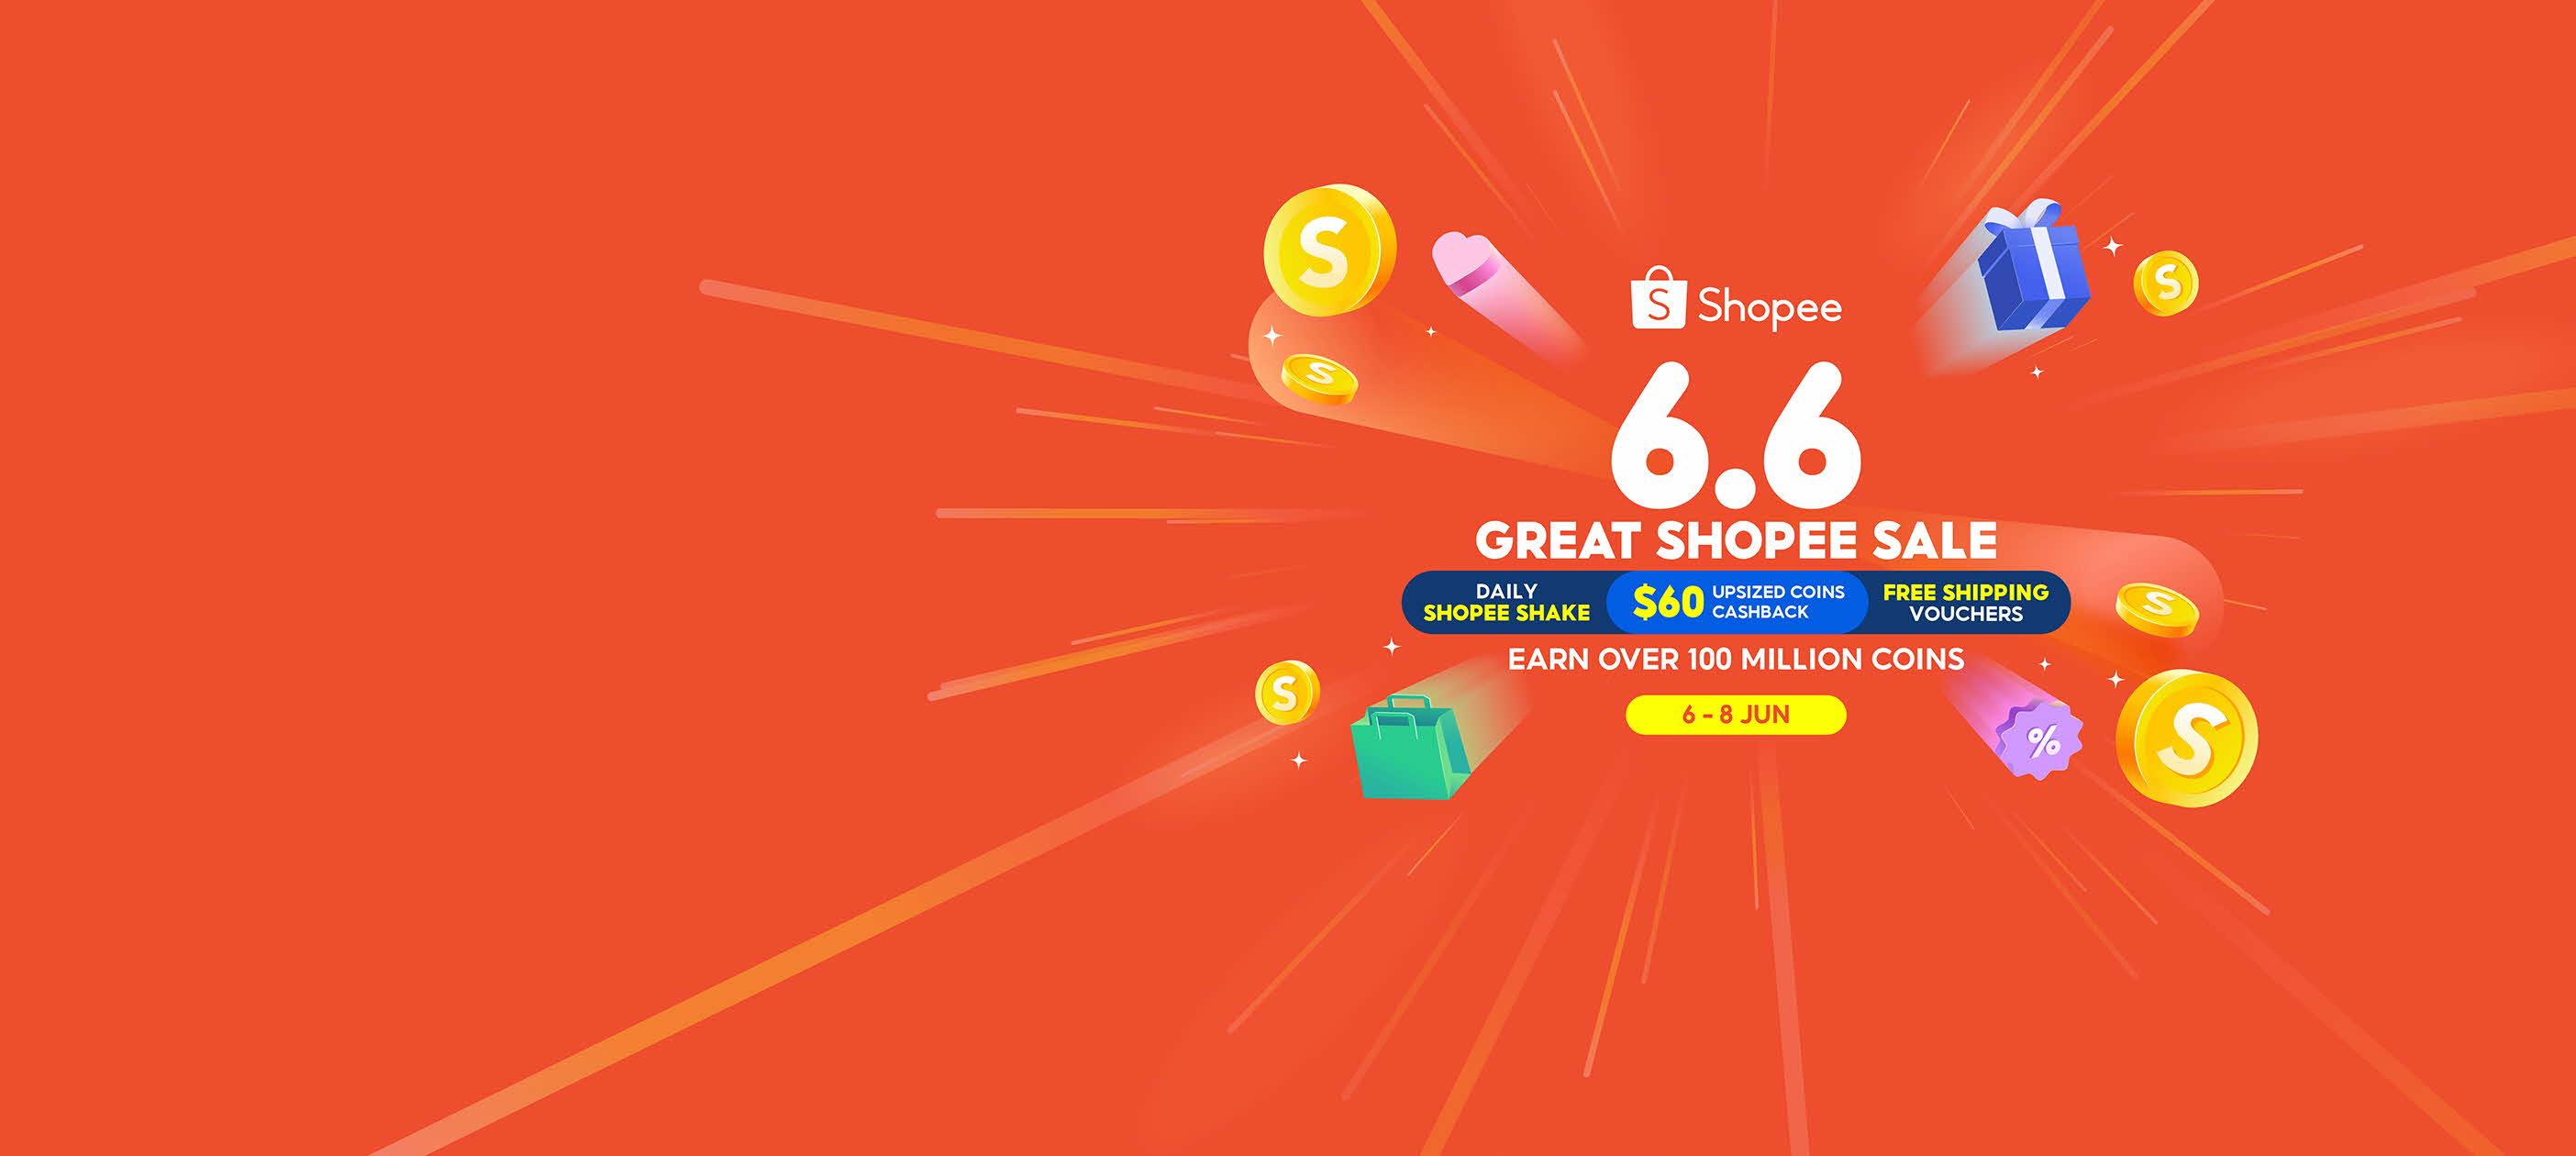 Bag more savings on Shopee 12.12 Birthday Sale with DBS/POSB Cards! & PayLah!